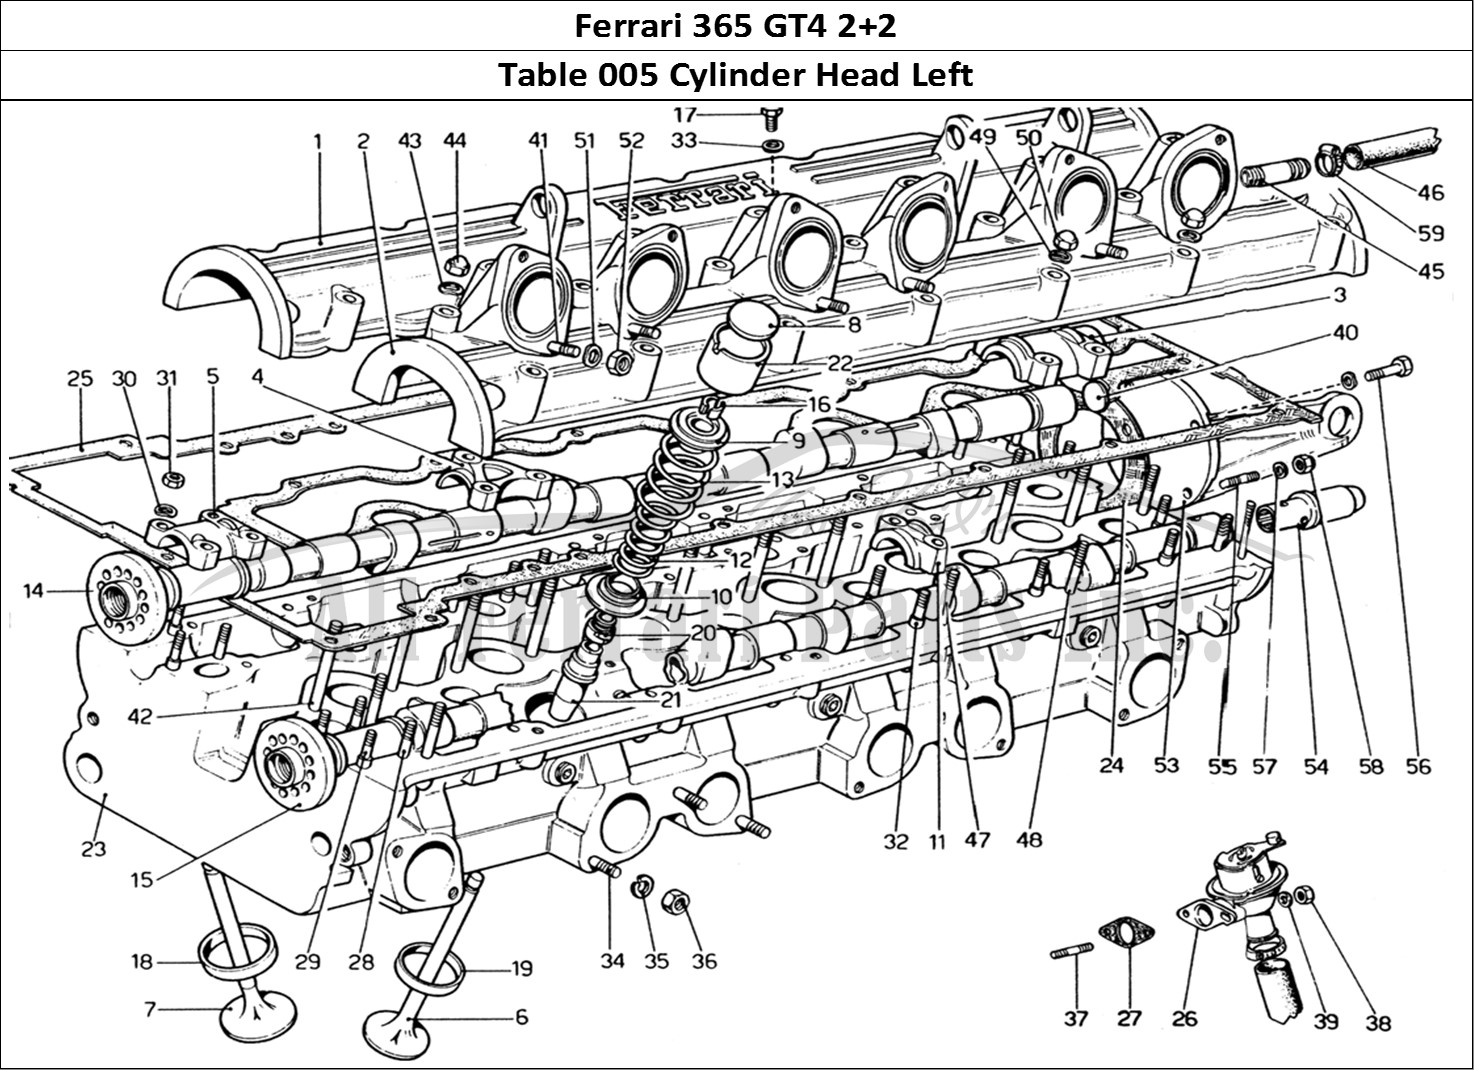 Ferrari Parts Ferrari 365 GT4 2+2 (1973) Page 005 Cylinder Head (Lelt)